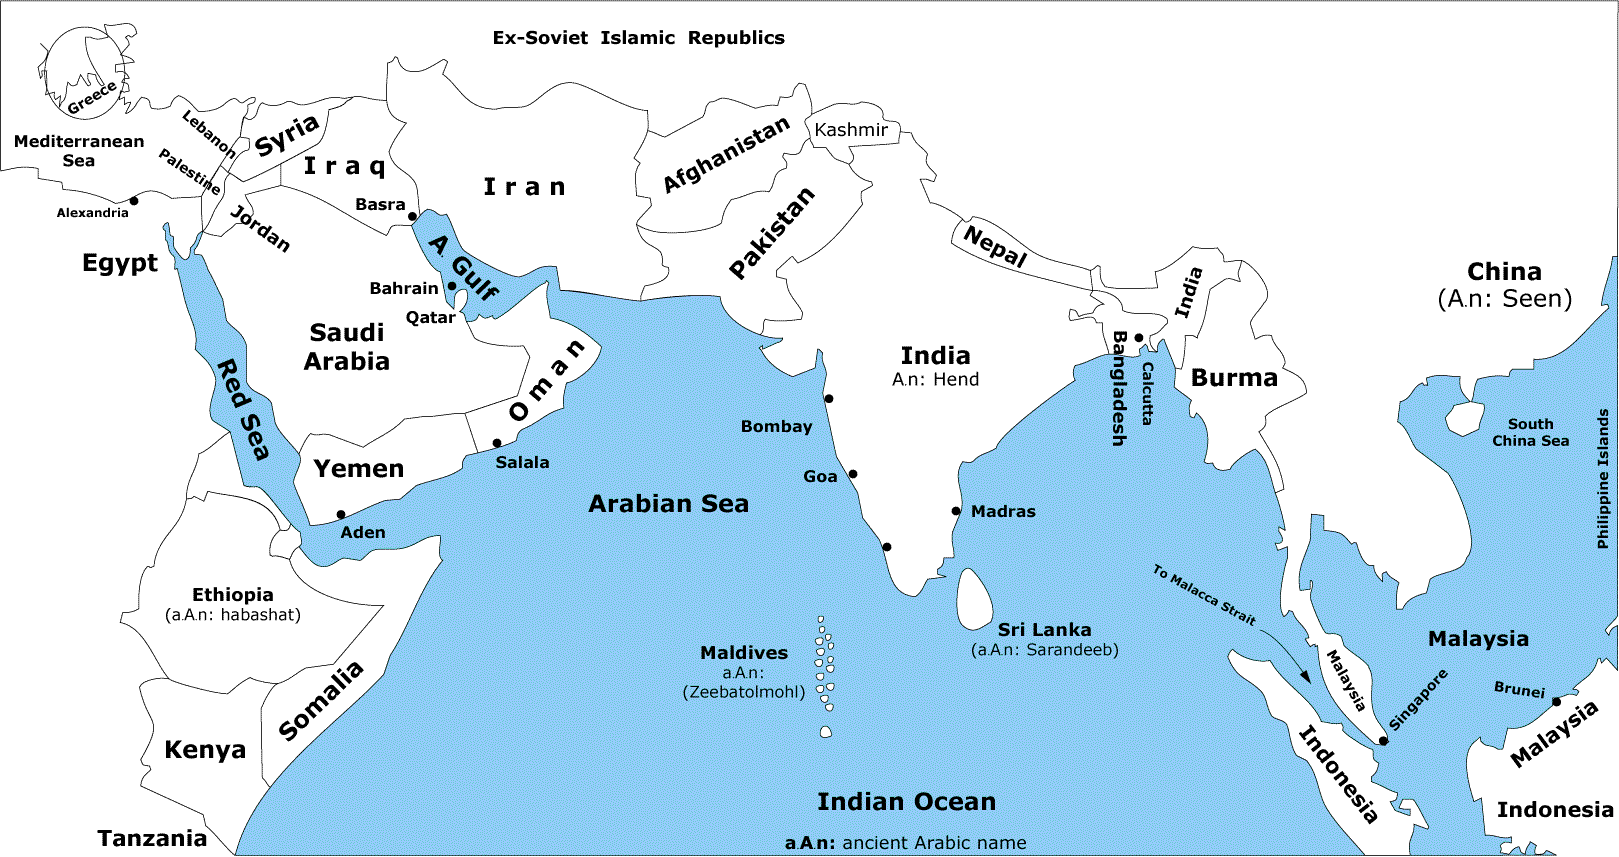 4 залива индийского океана. Индийский океан на карте. Заливы и проливы индийского океана на карте. Проливы индийского океана на карте. Заливы индийского океана на карте.